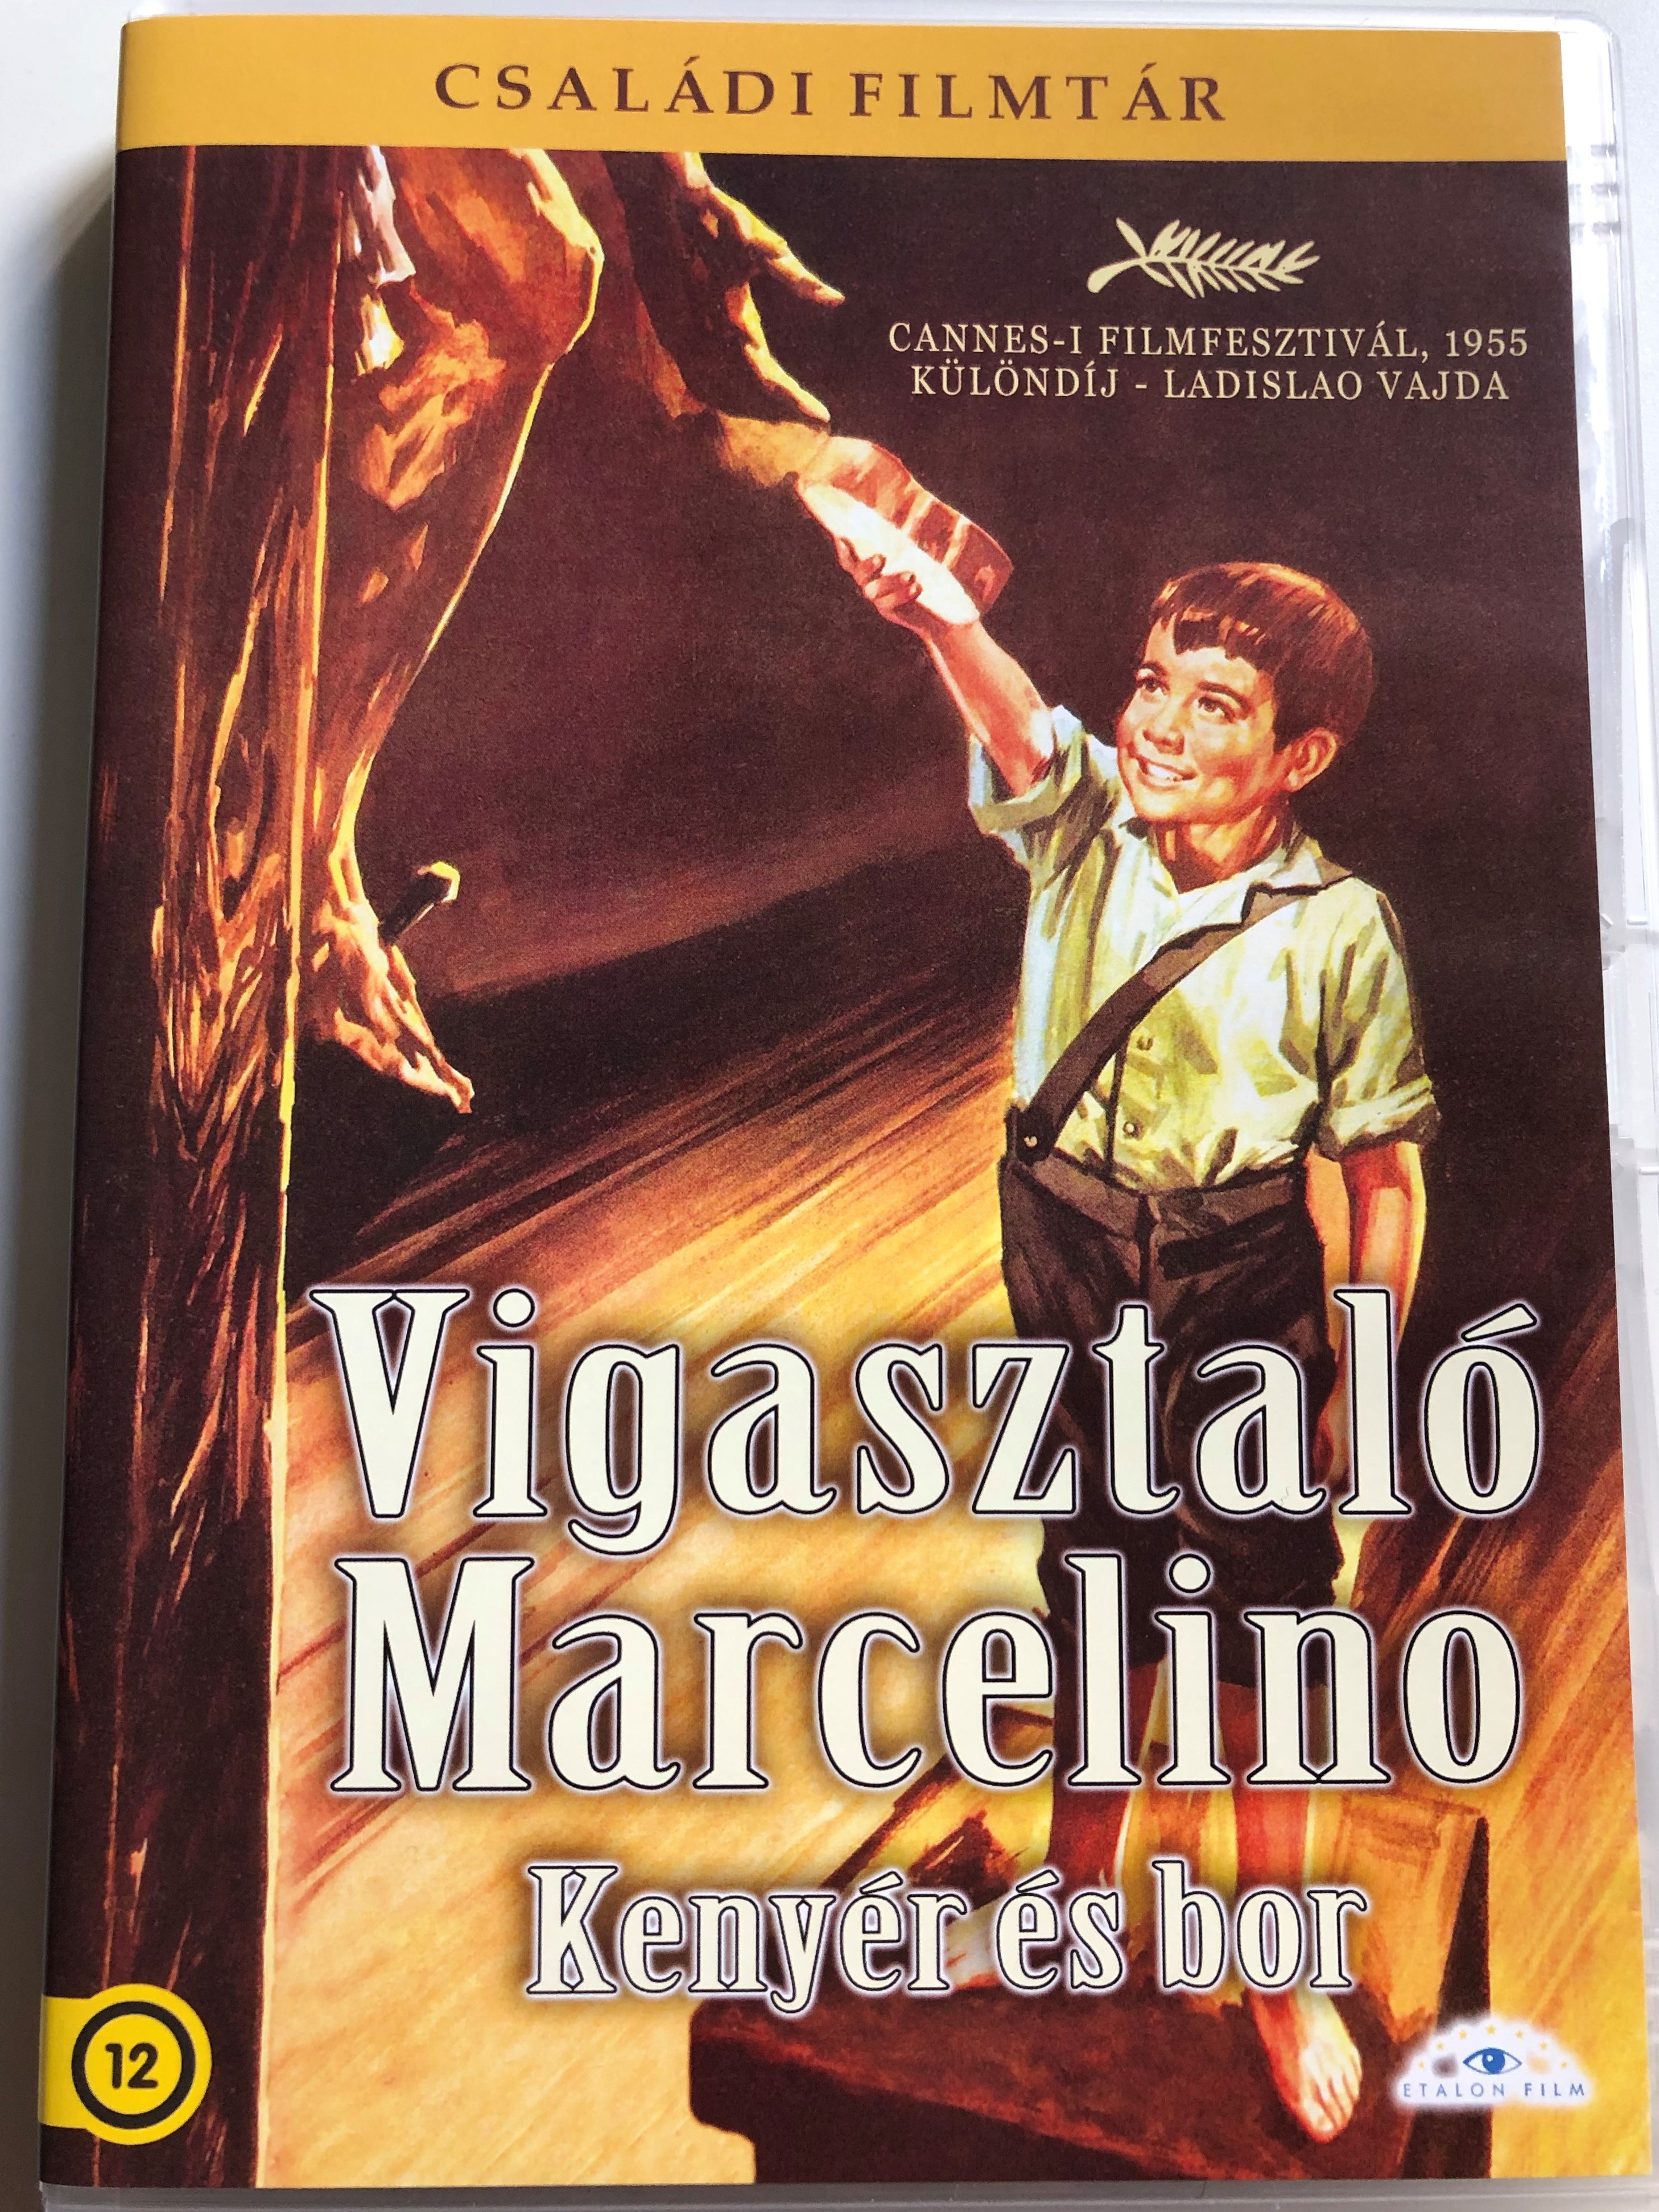 marcelino-pan-y-vino-dvd-1955-vigasztal-marcelino-keny-r-s-bor-1.jpg